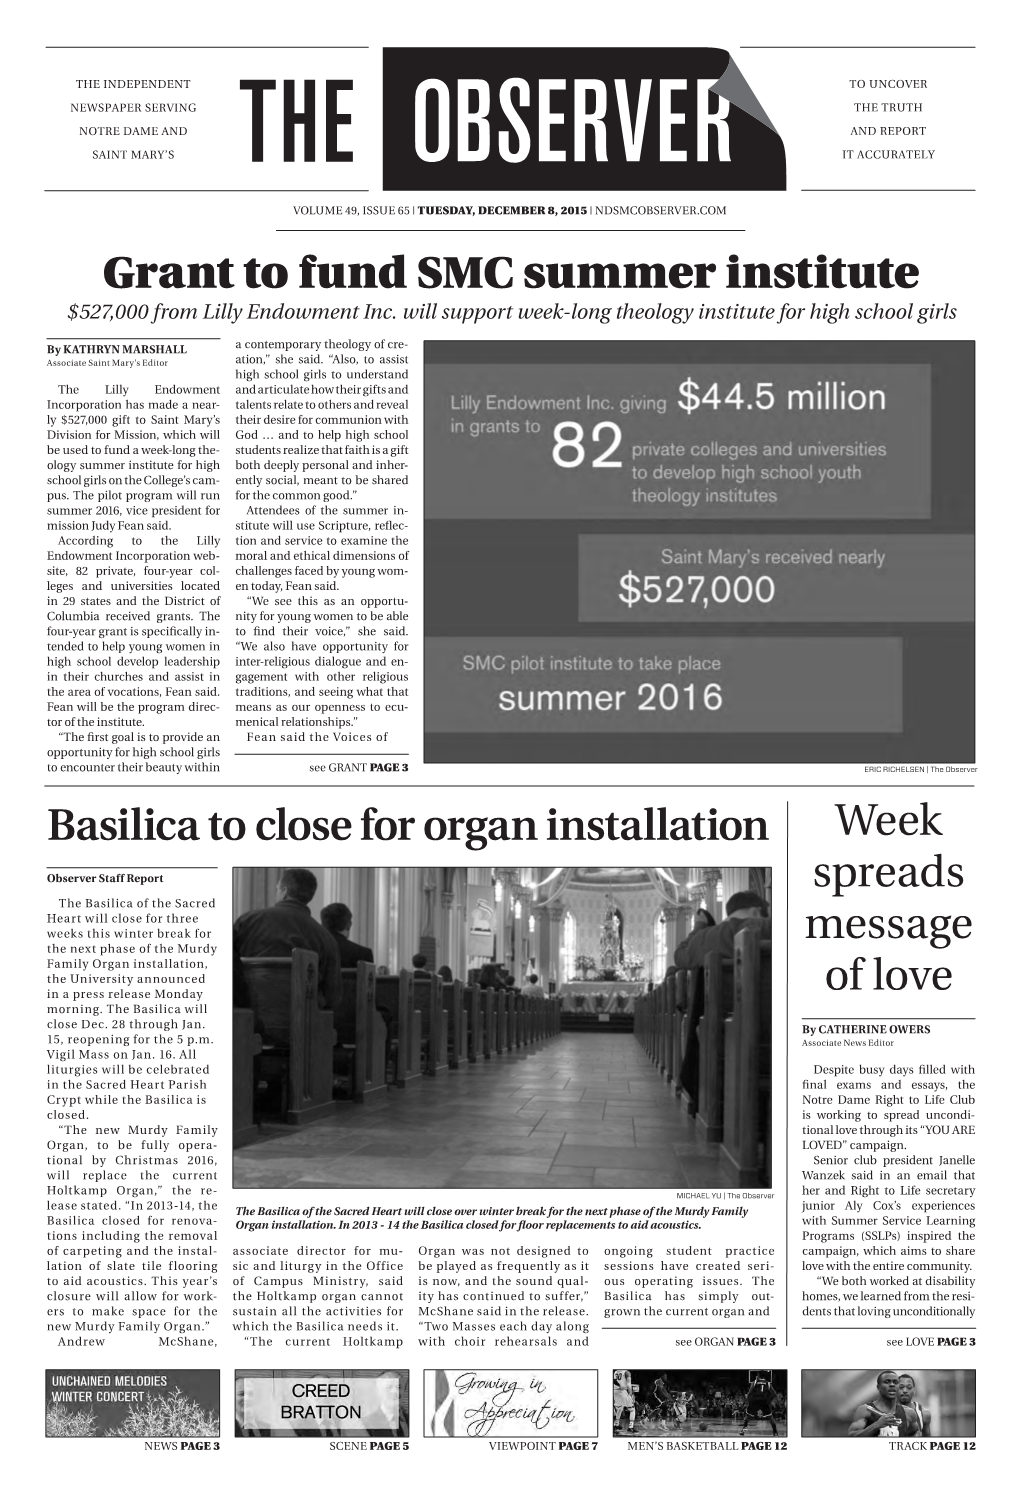 Grant to Fund Smc Summer Institute Basilica to Close for Organ